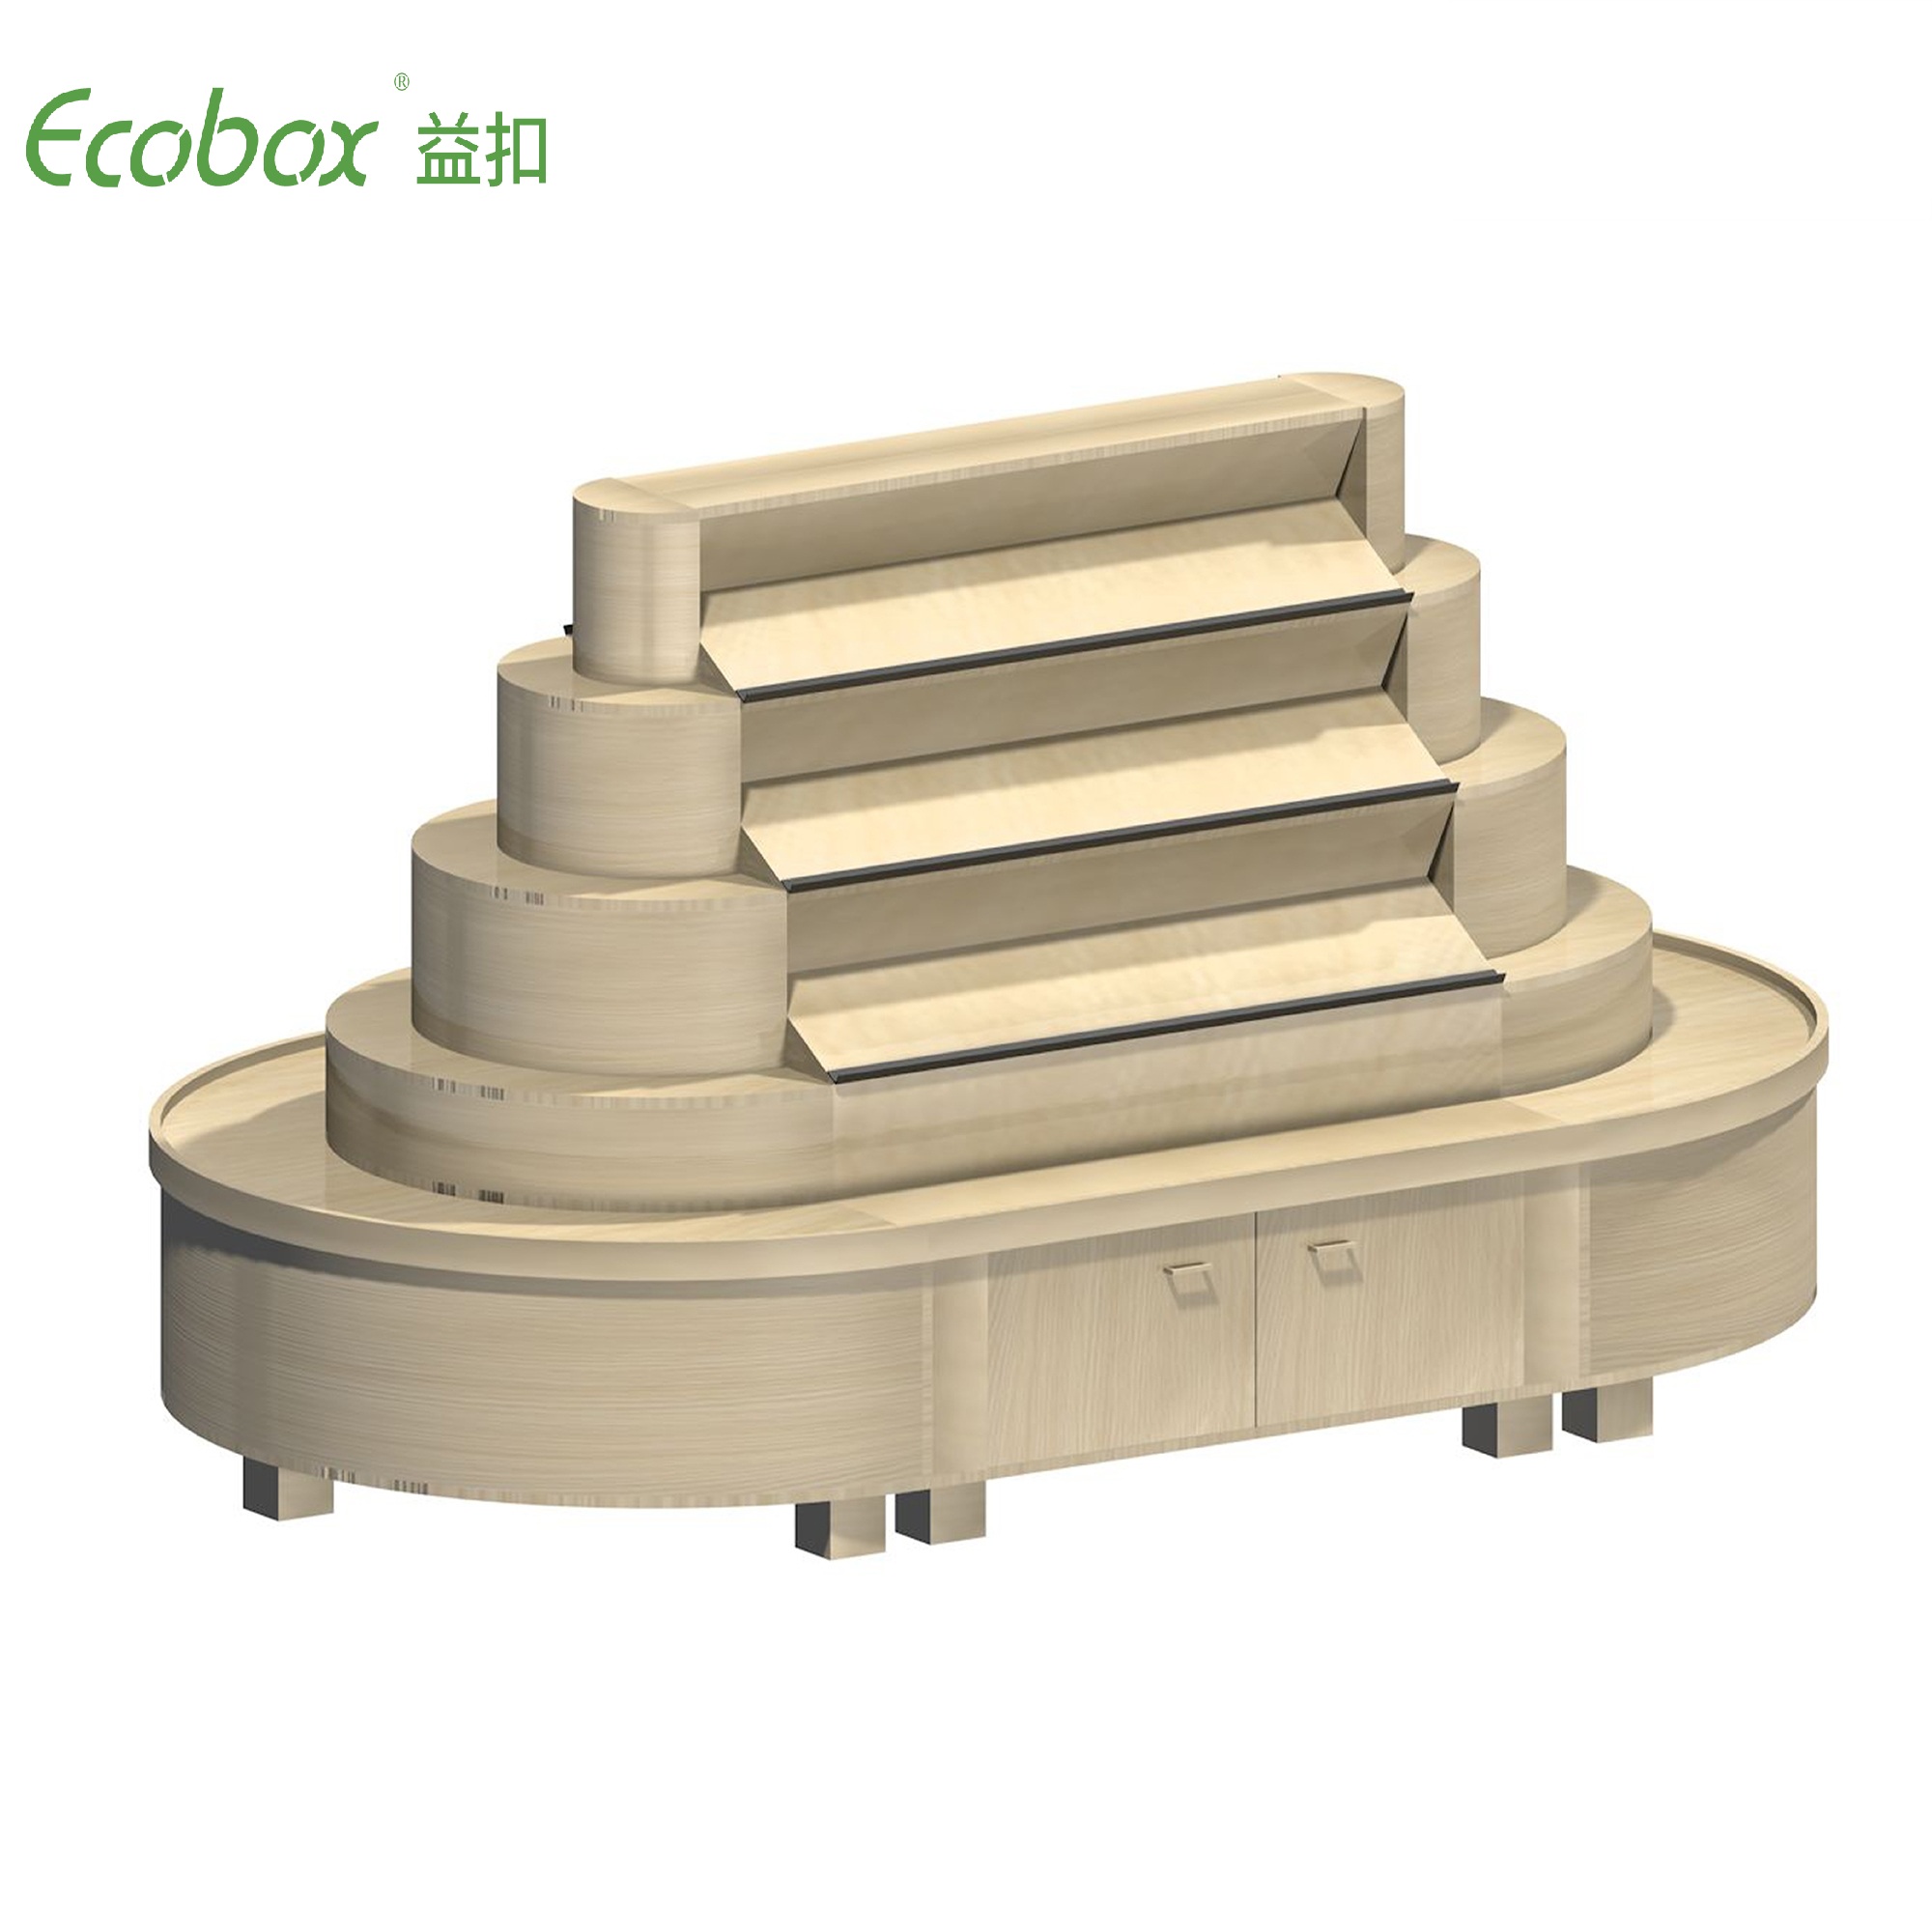 Ecobox G002 series round shelf with Ecobox bulk bins supermarket bulk food displays